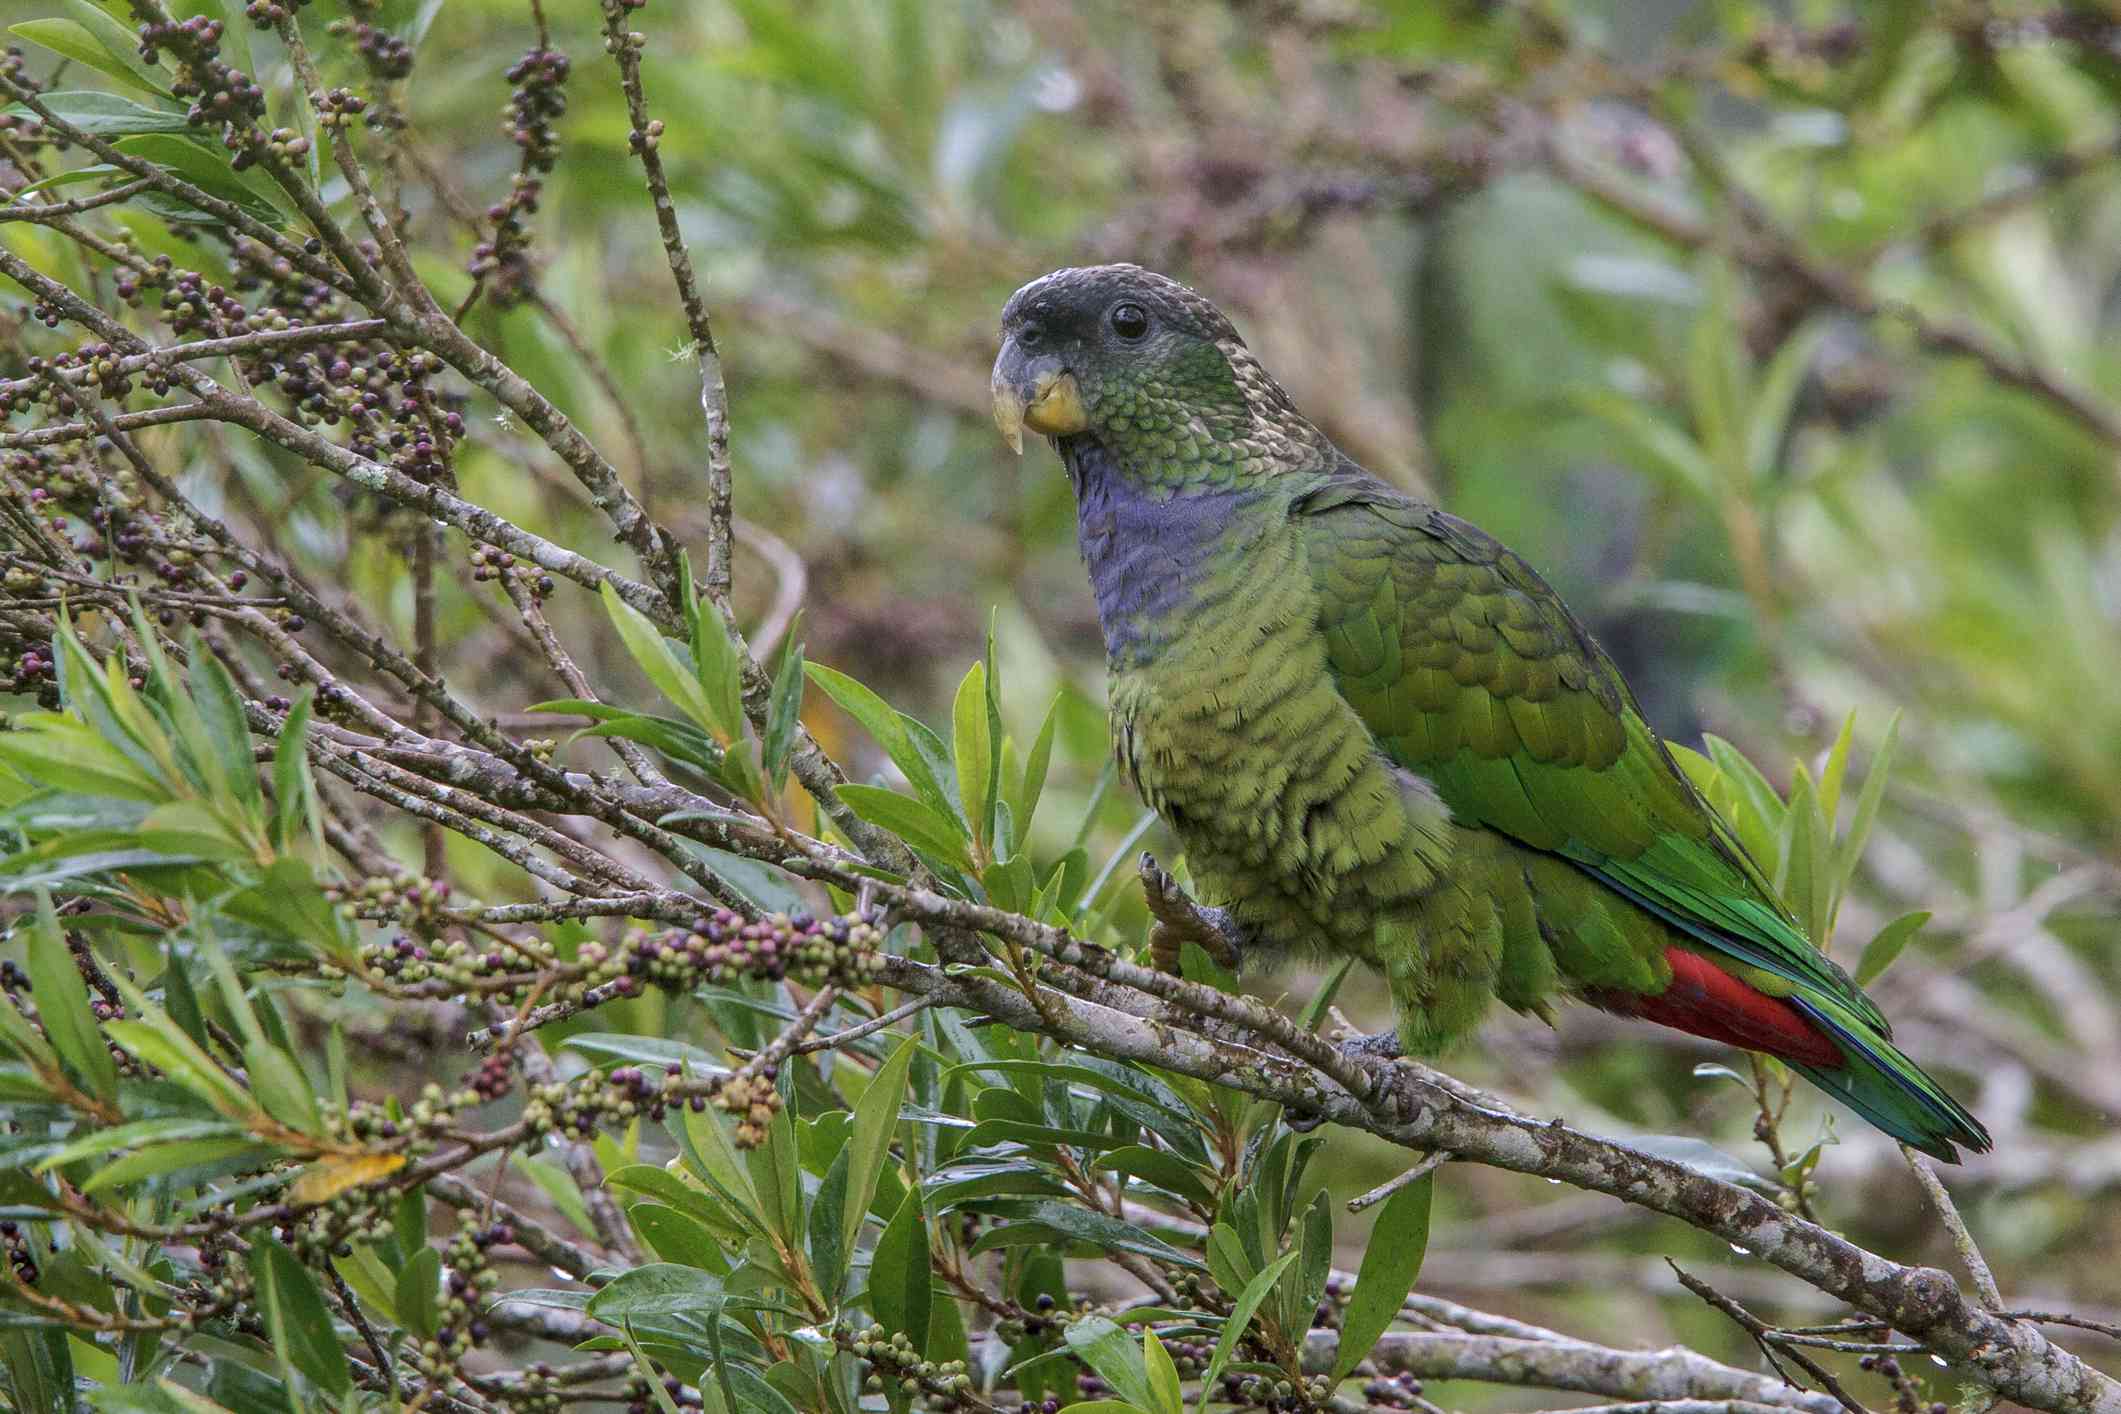 Pionus parrot in a tree